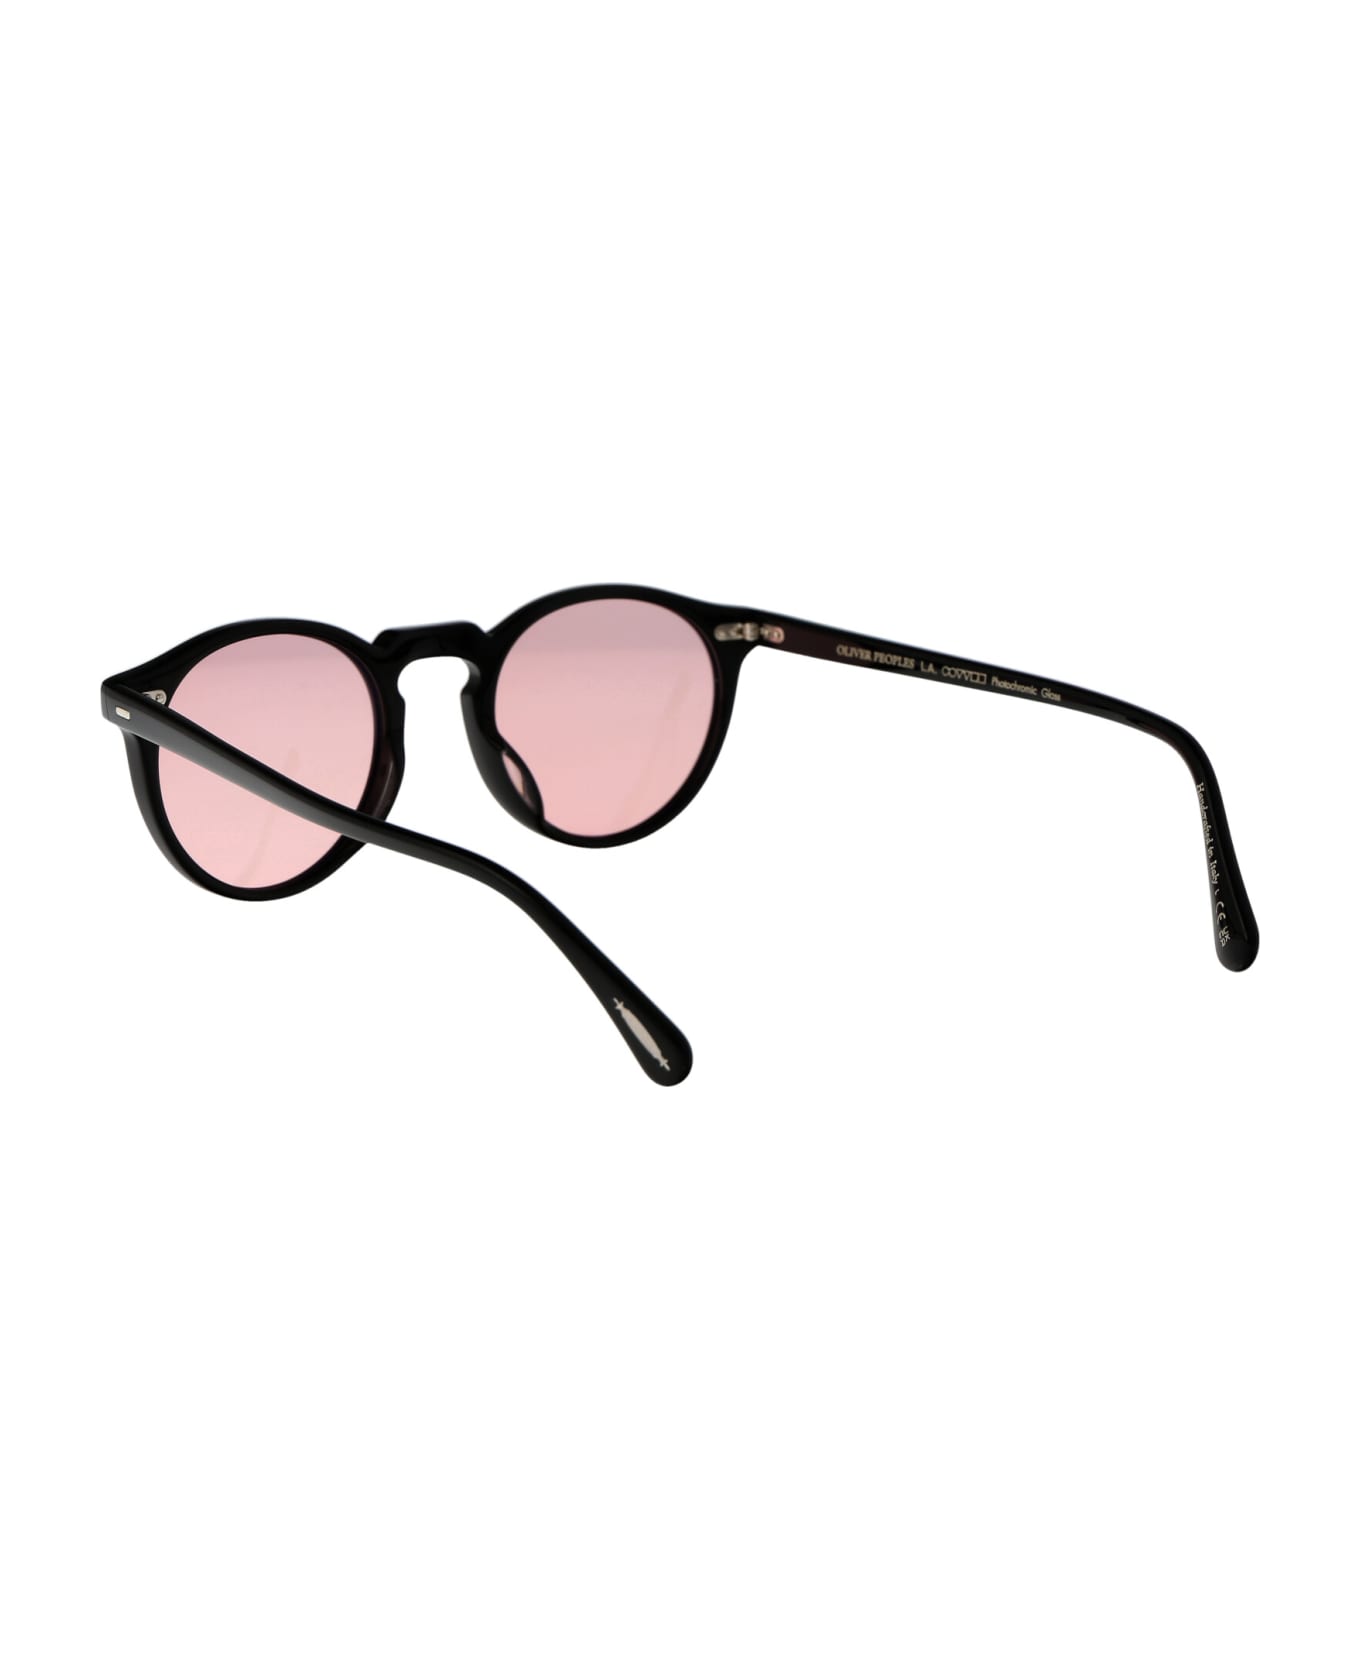 Oliver Peoples Gregory Peck Sun Sunglasses - 10054Q Black